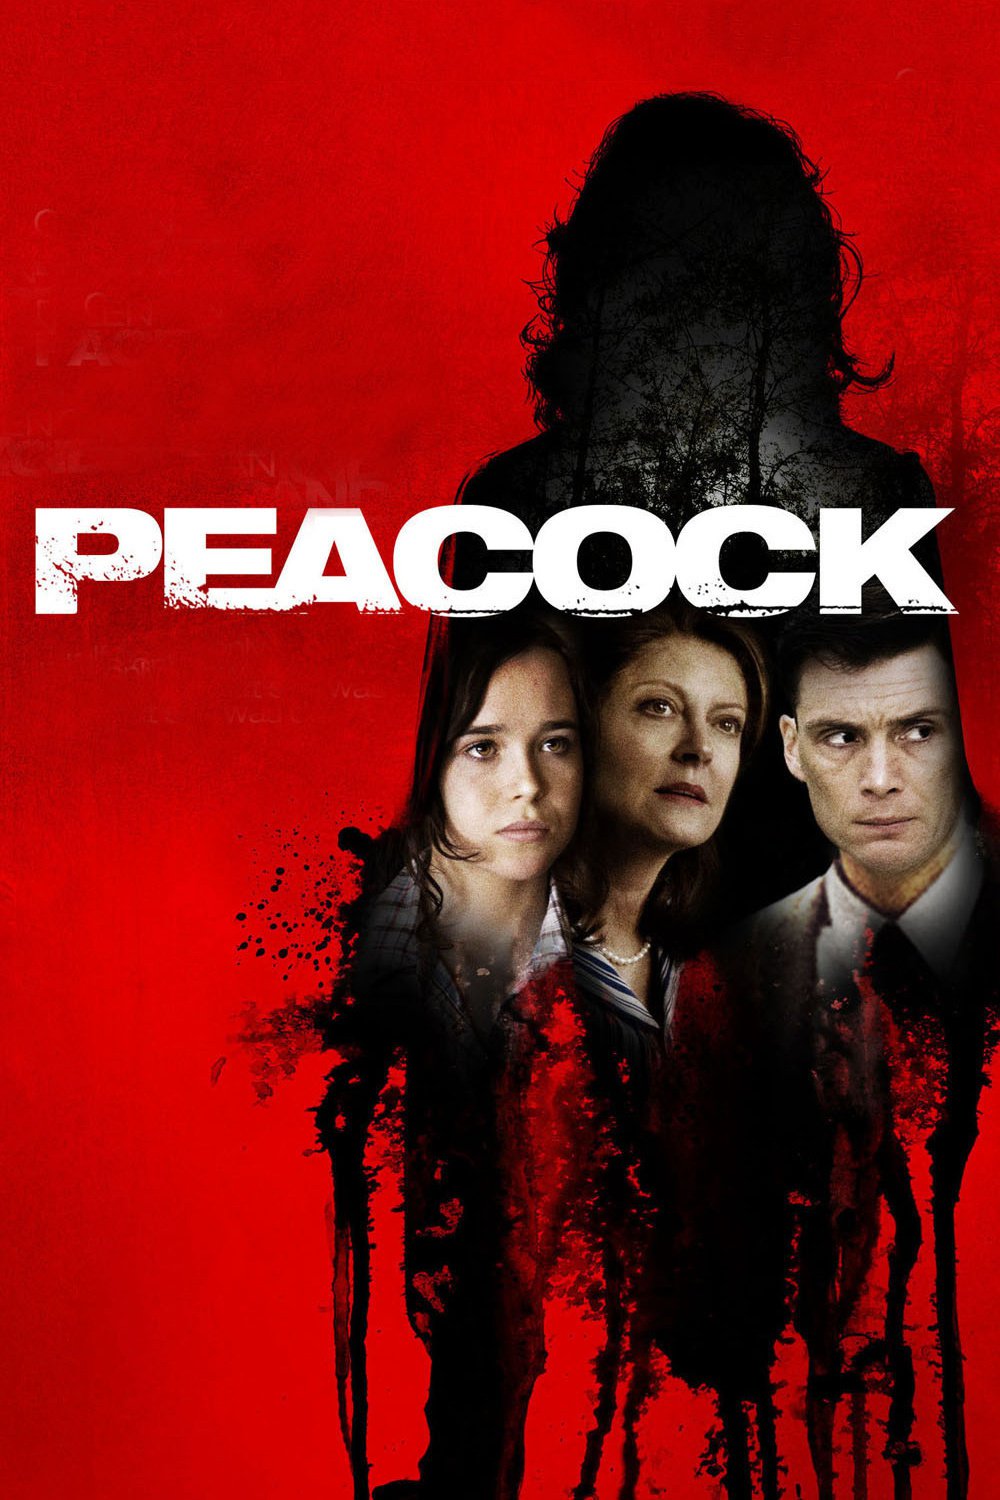 Plakat von "Peacock"